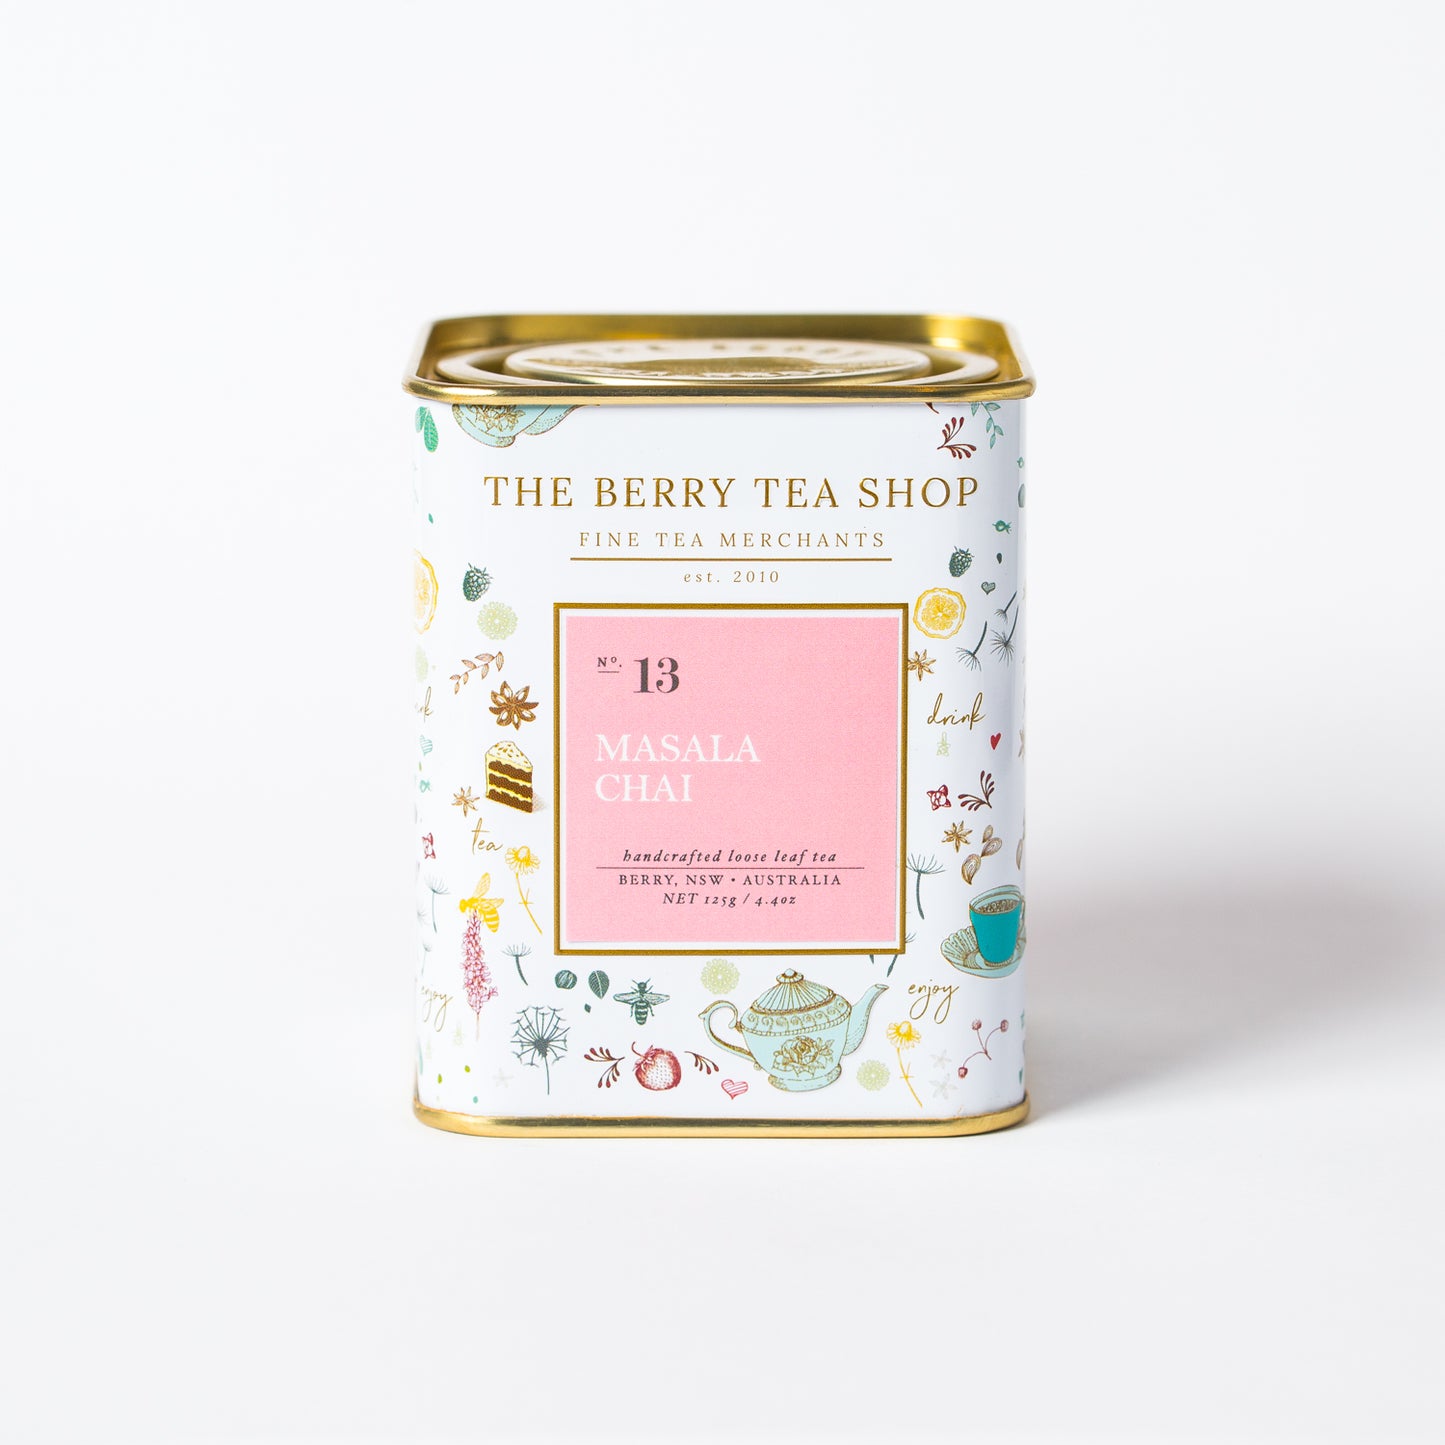 The Berry Tea Shop (@theberryteashop) • Instagram photos and videos